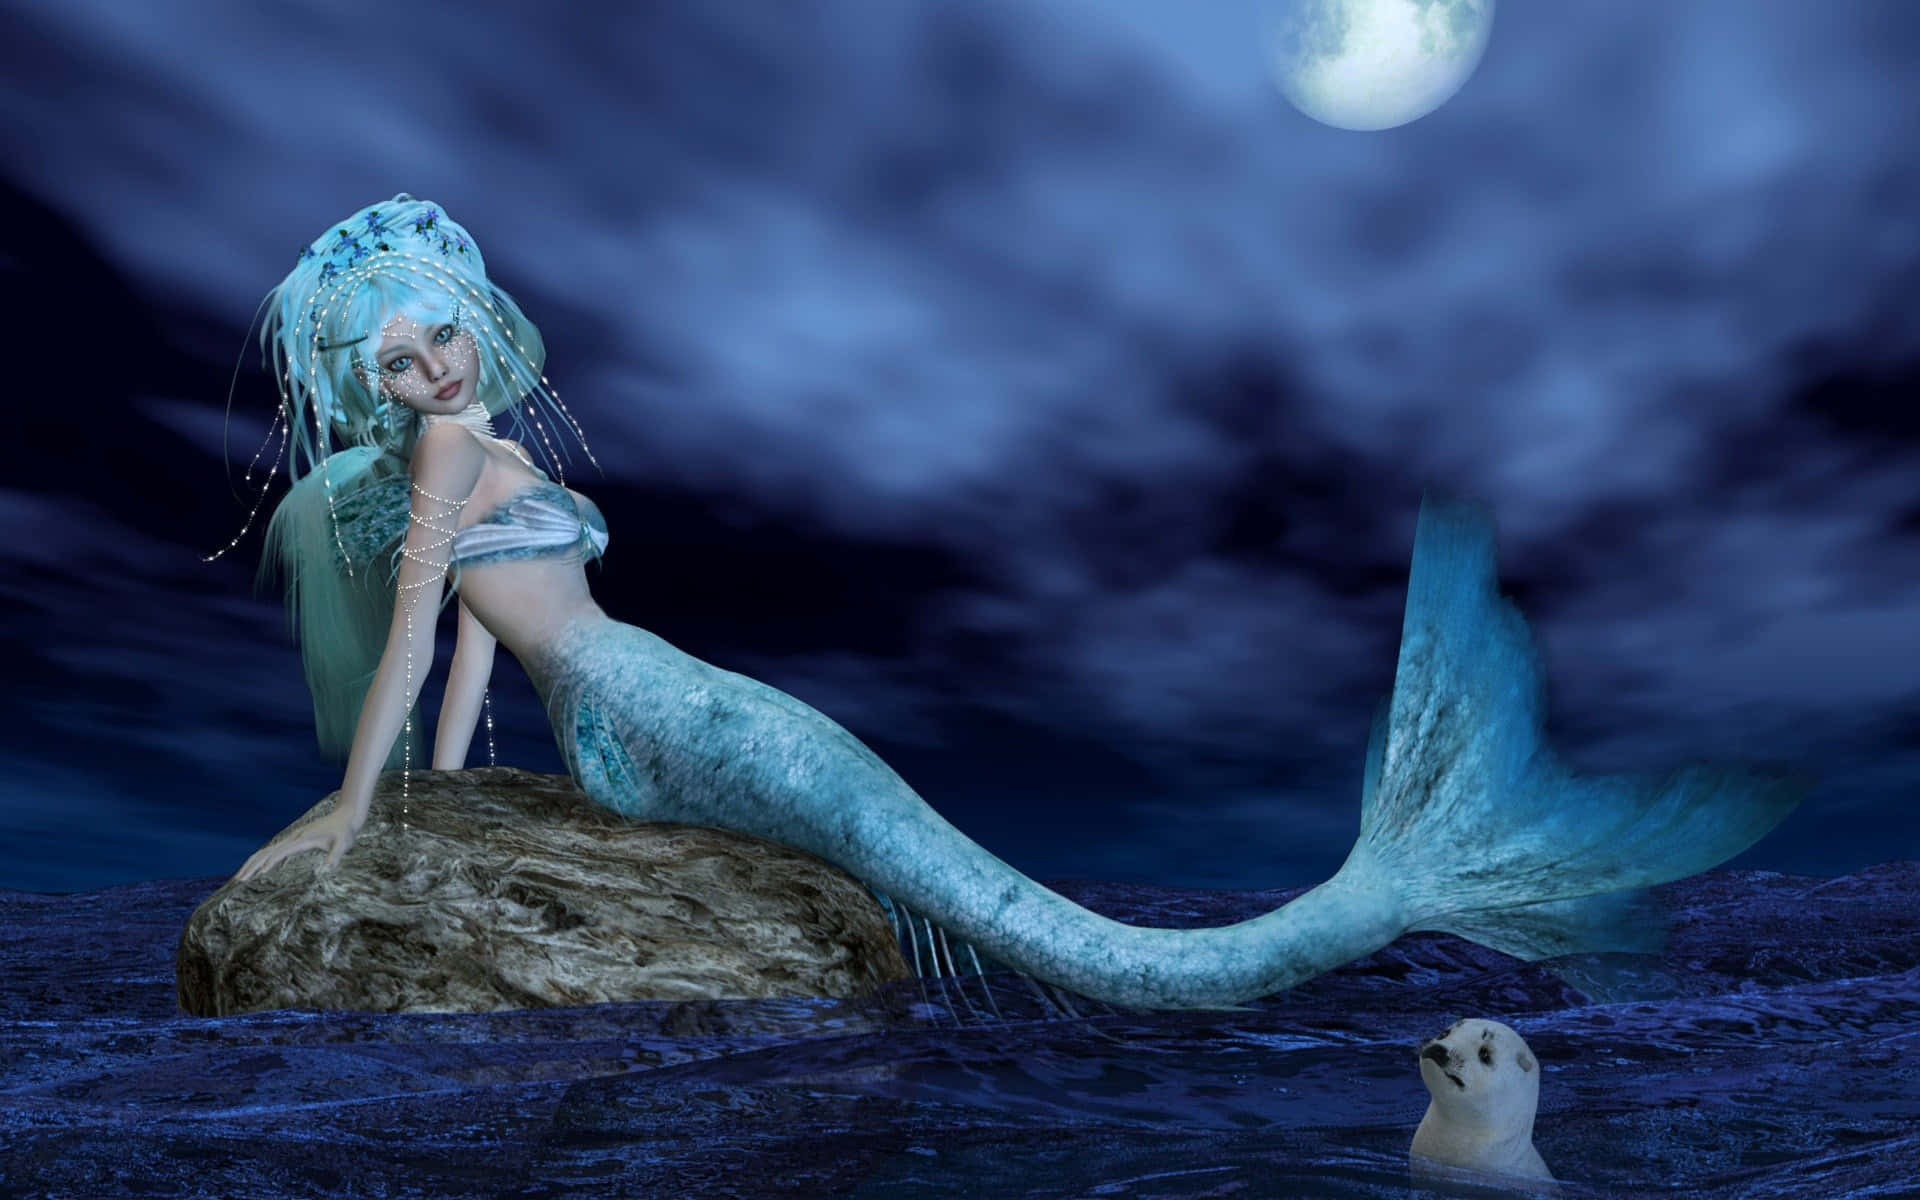 A magical mermaid swims happily in a sunlit ocean.